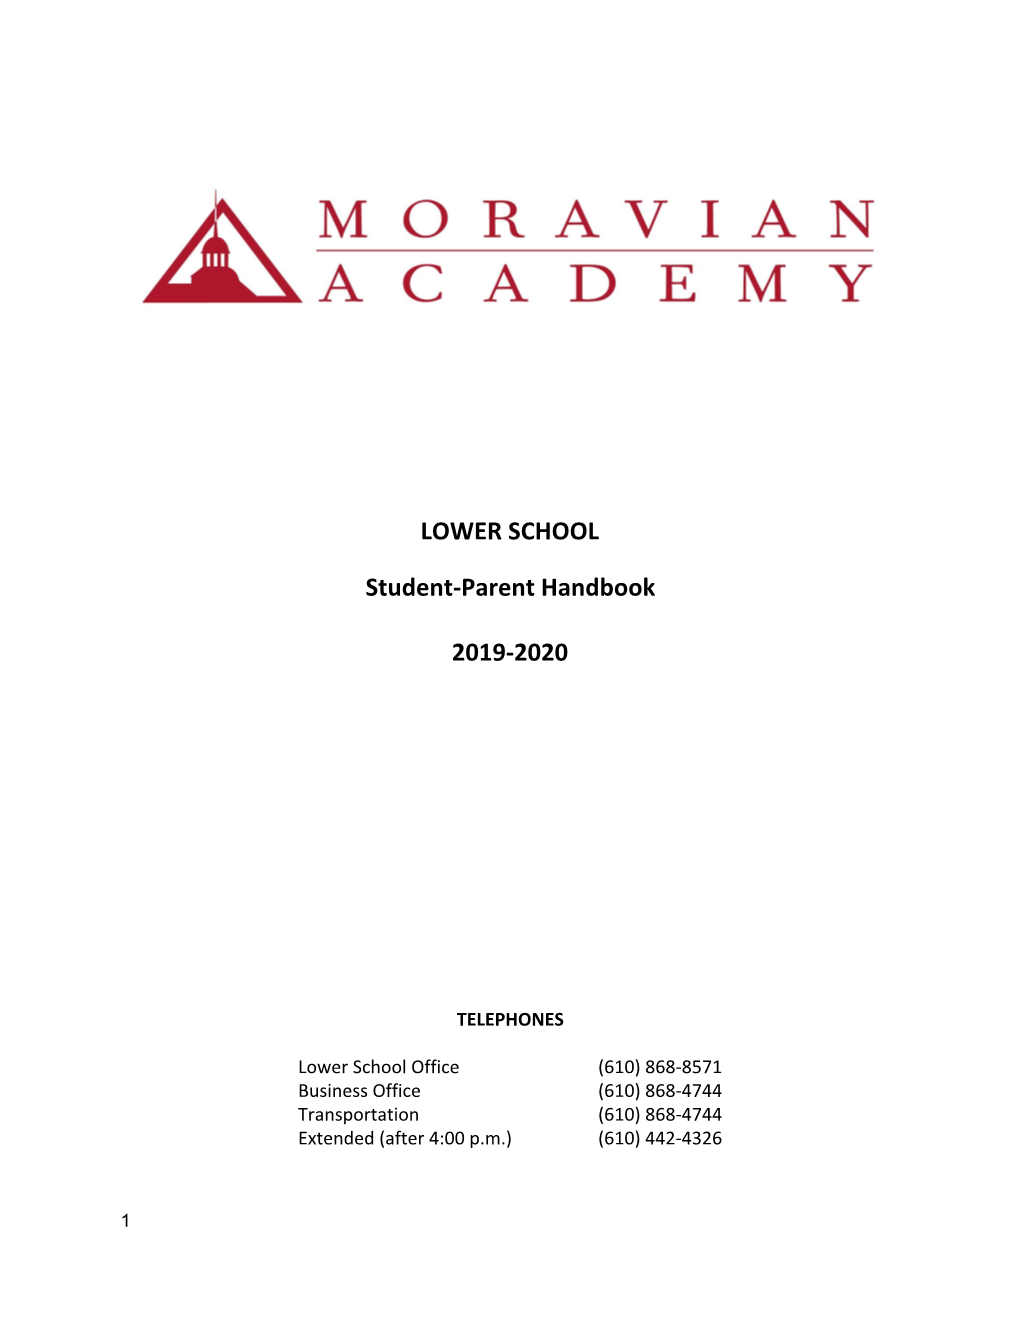 LOWER SCHOOL Student-Parent Handbook 2019-2020